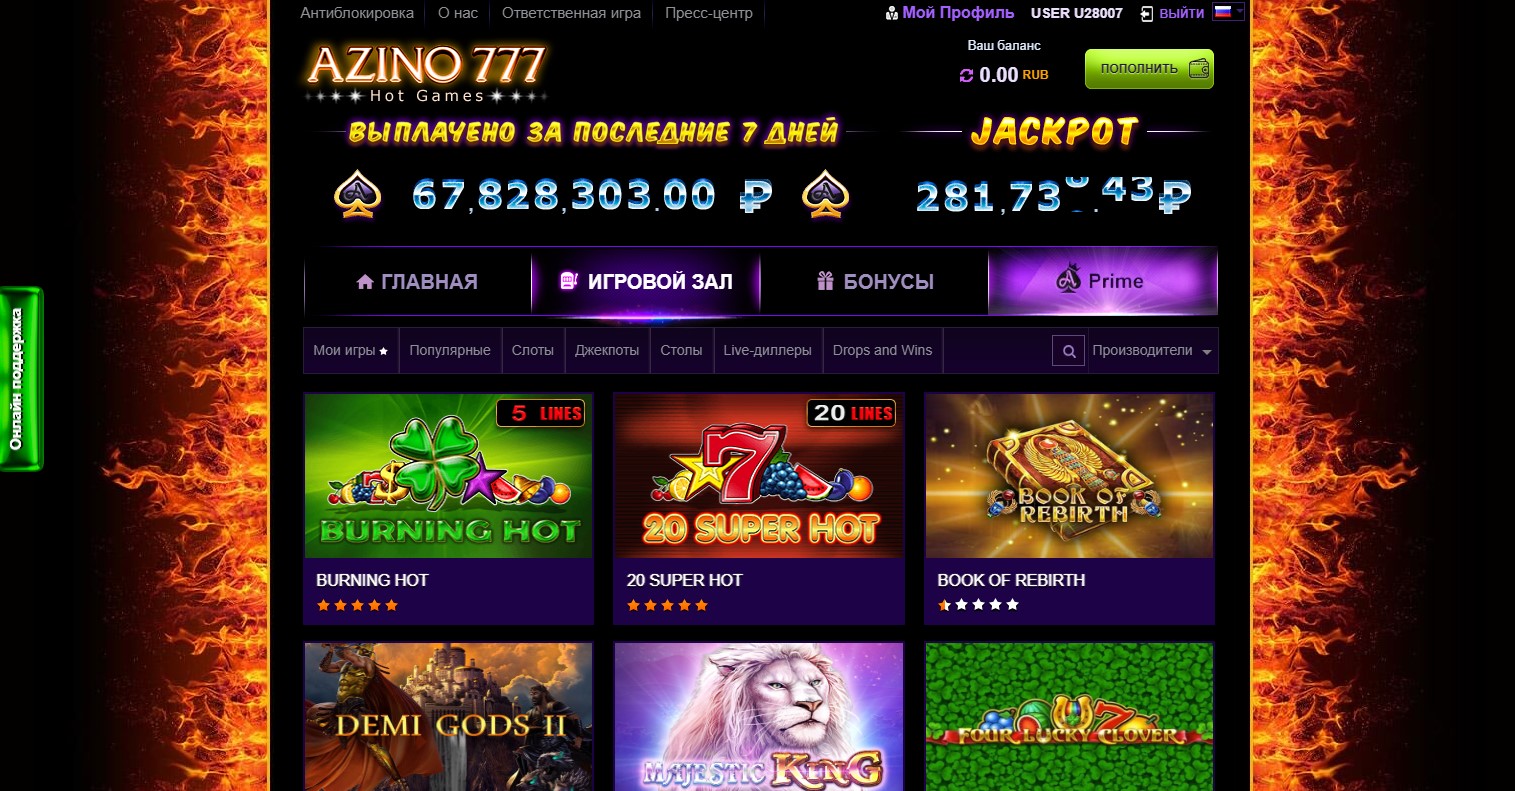 Разнообразие игр в онлайн казино Азино 777